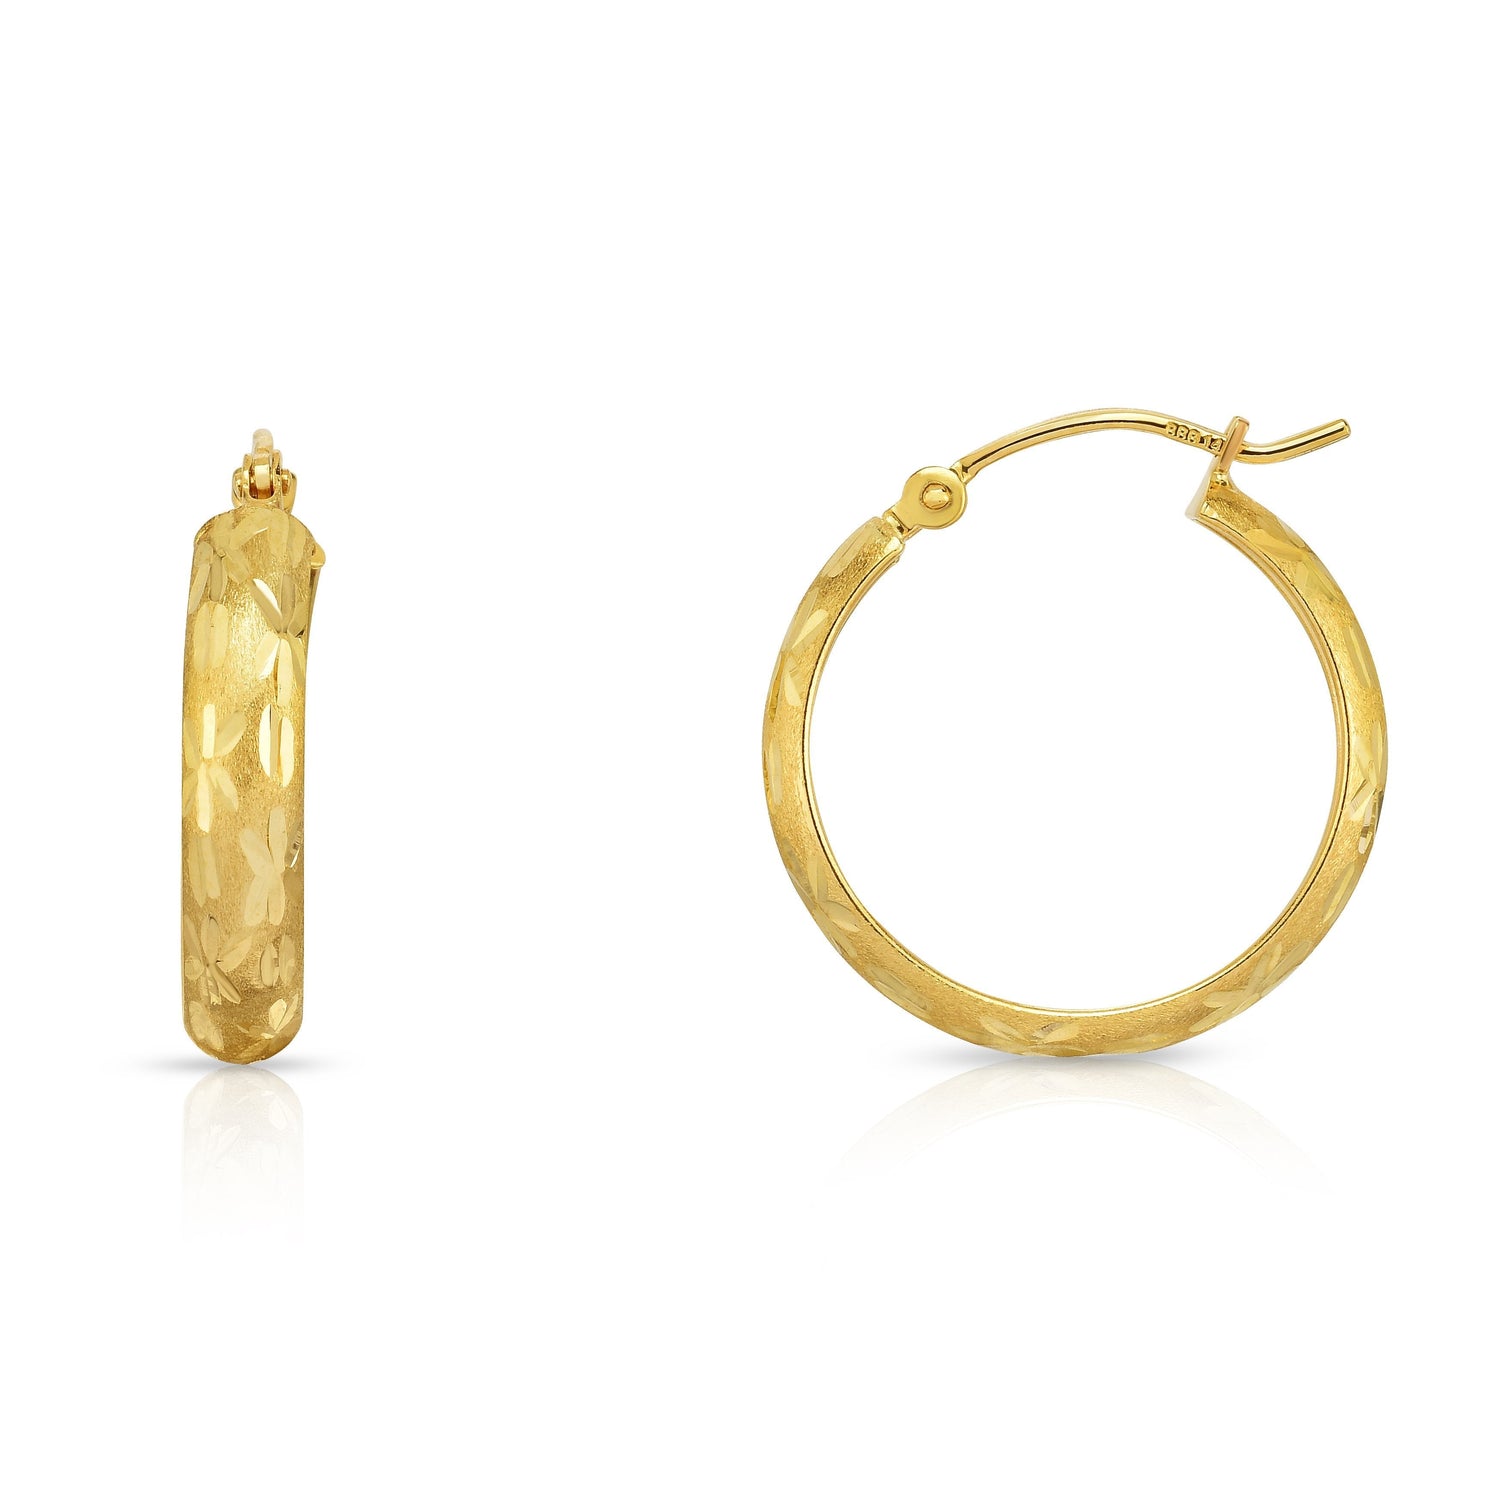 14k Yellow Gold Diamond Cut Huggies Hoop Earrings Flower Design (4mm)